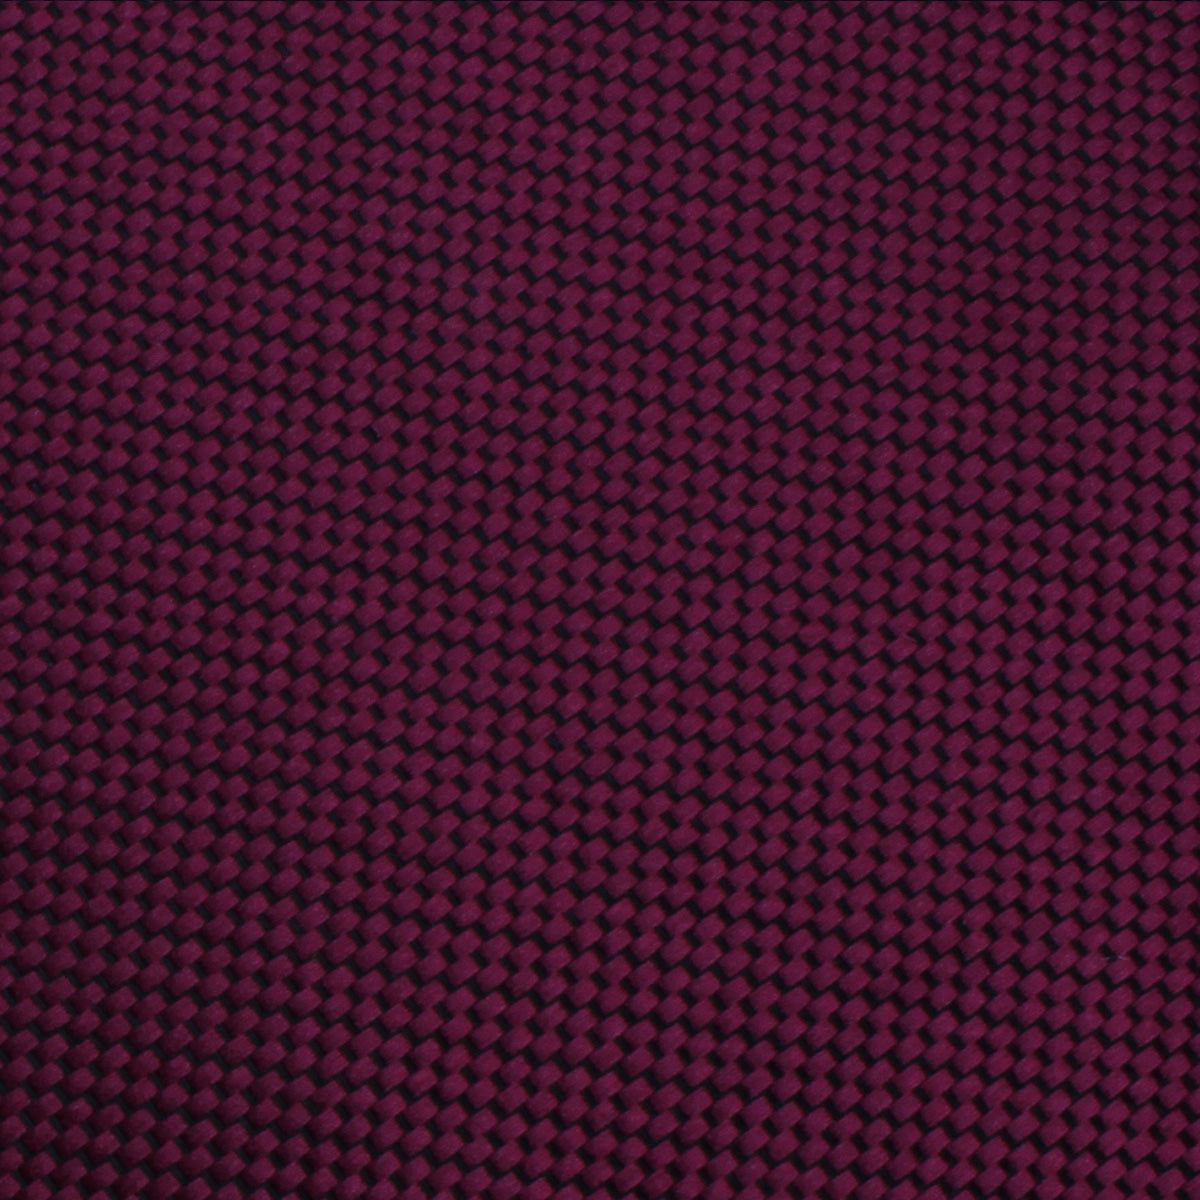 Metallic Maroon Oxford Weave Necktie Fabric